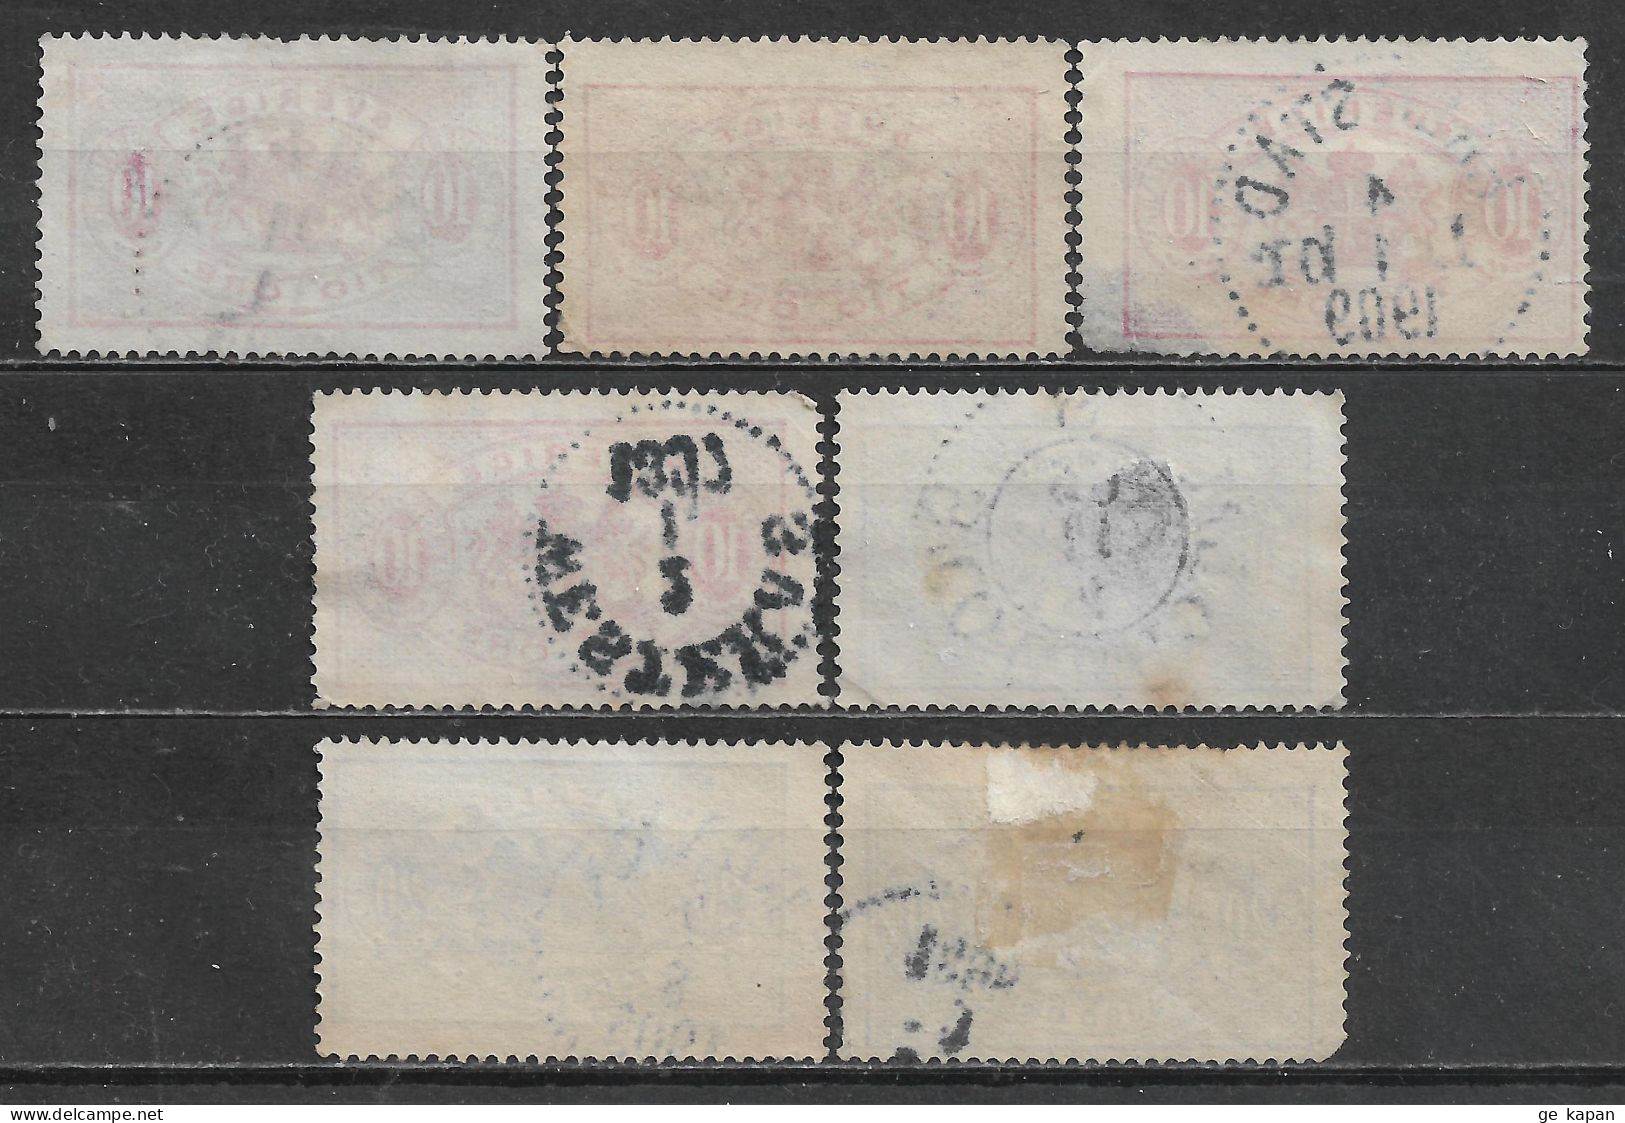 1891,1895 SWEDEN Official Set Of 7 Used Stamps Perf.13 (Scott # O17,O20) CV $2.40 - Officials